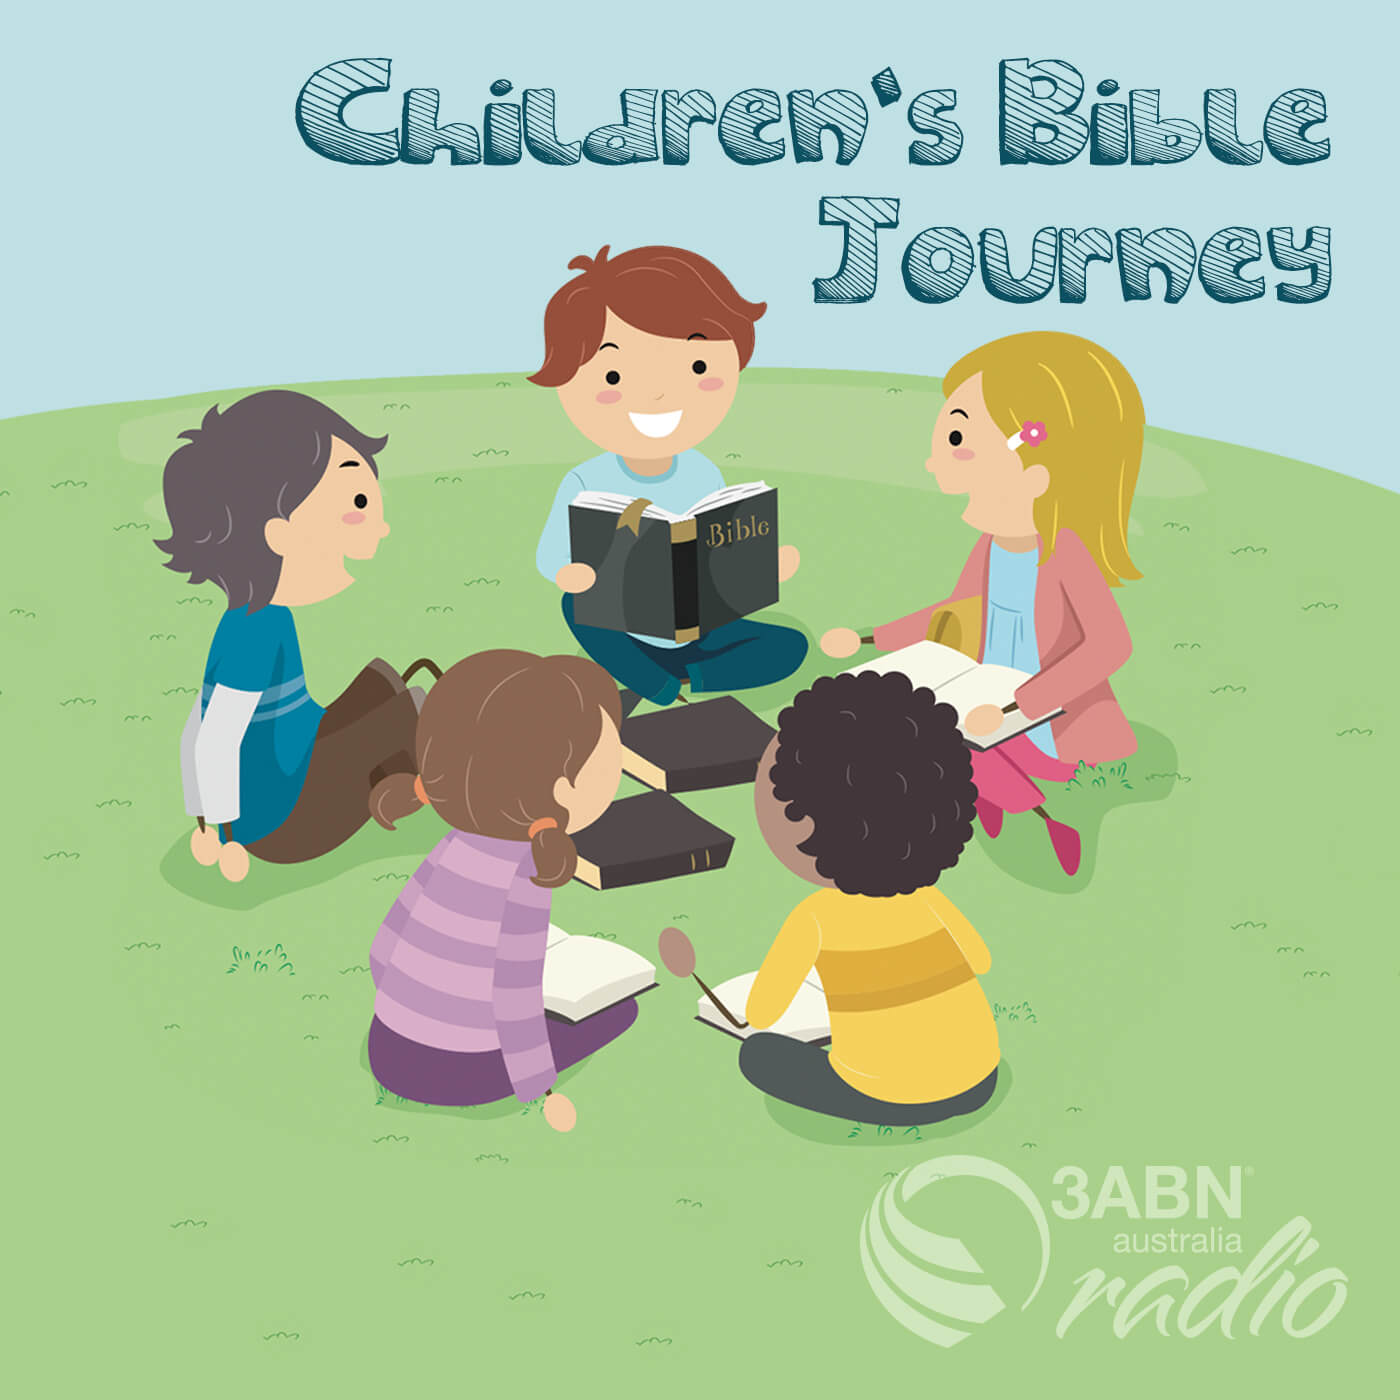 Children's Bible Journey - 2152